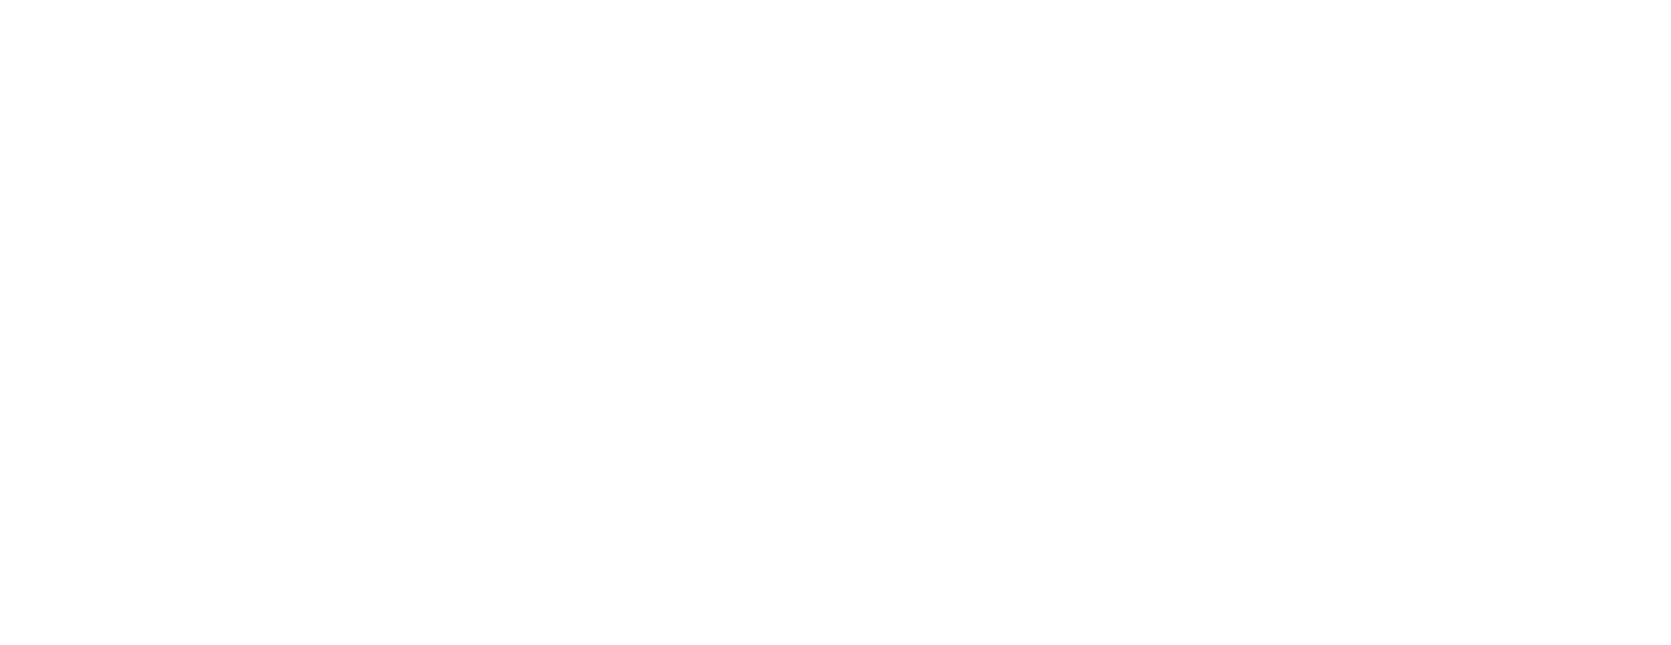 Cosmic Robotics logo